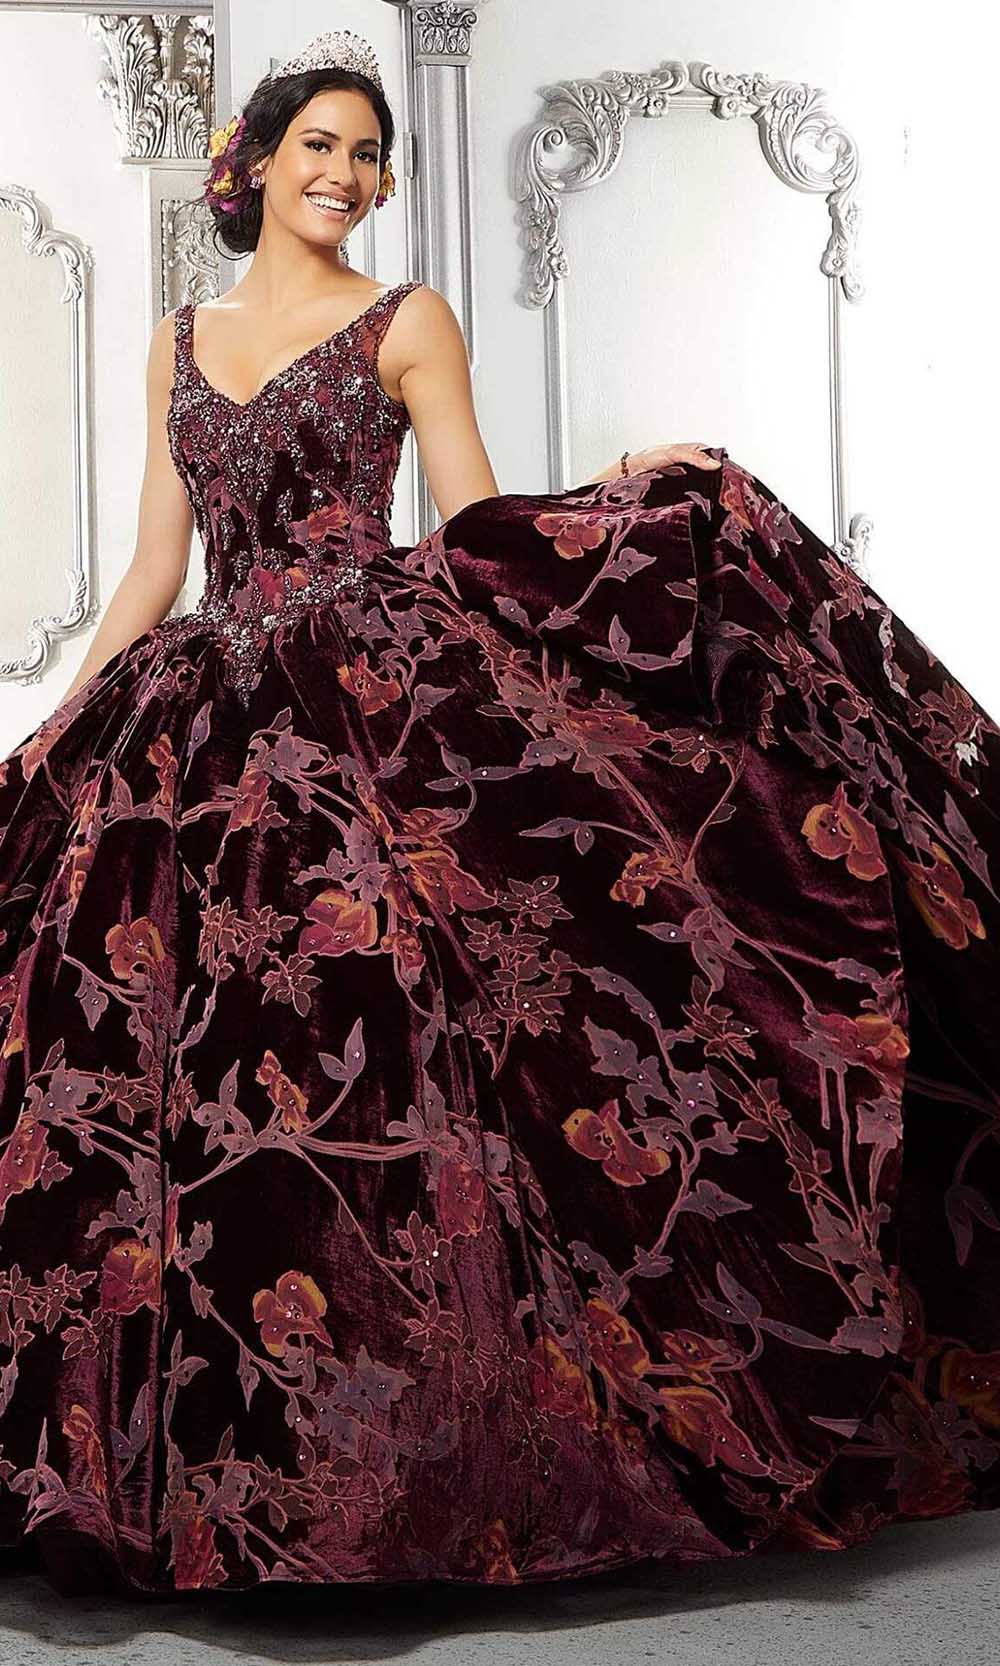 Georgia Crown vintage velvet dress 🖤🤍 size 32/8. R500 | Instagram